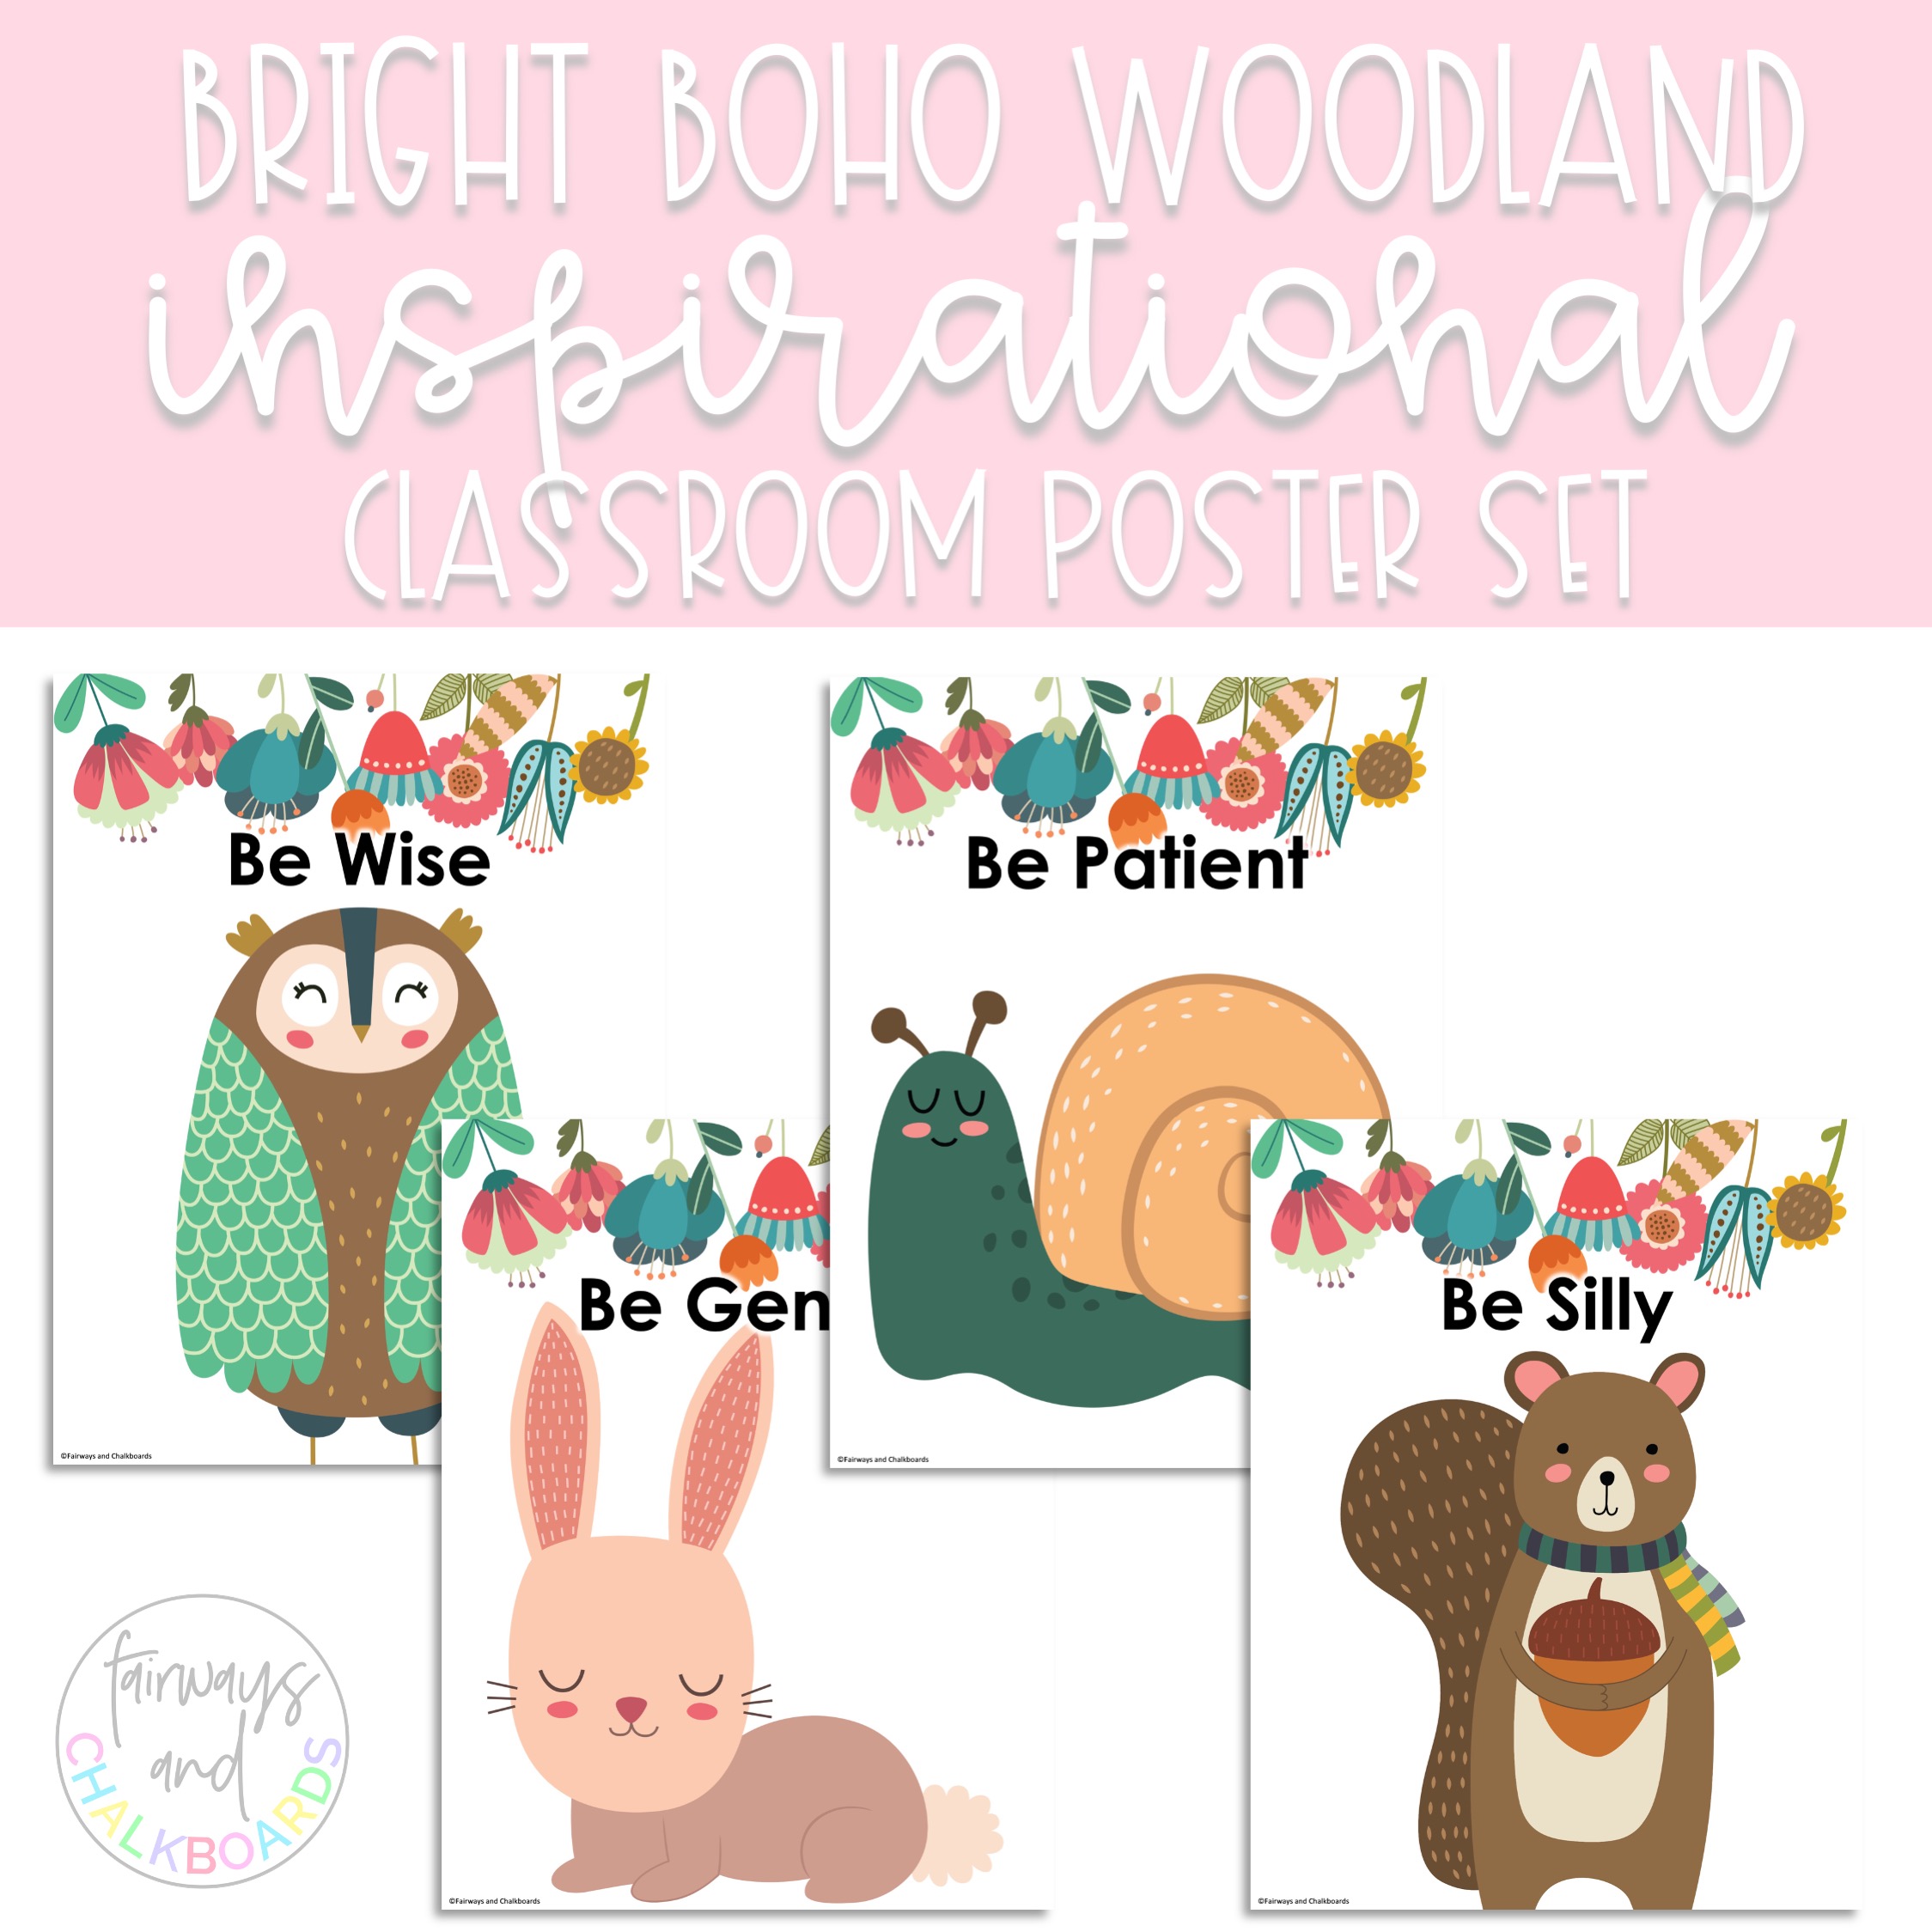 Bright Boho Woodland Inspirational Post Set